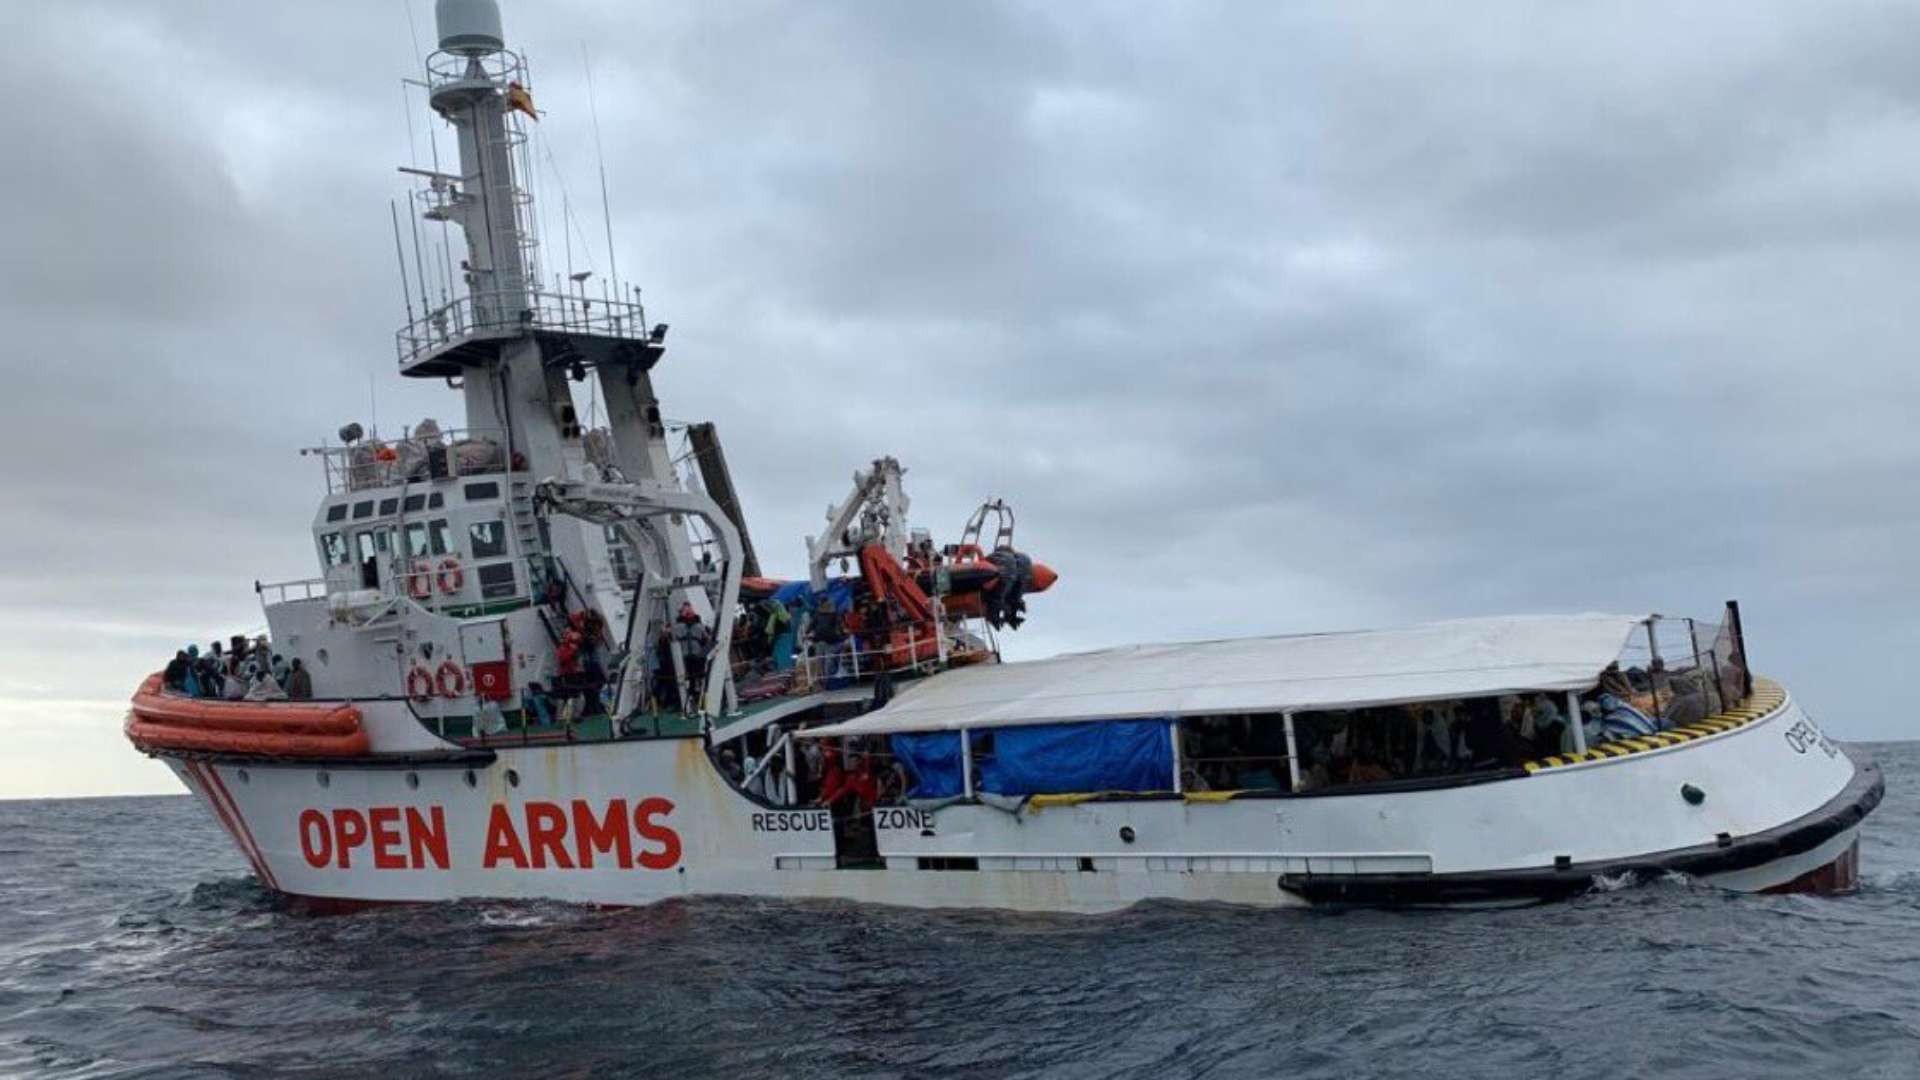 Llega a España el barco Open Arms con más de 300 migrantes a bordo